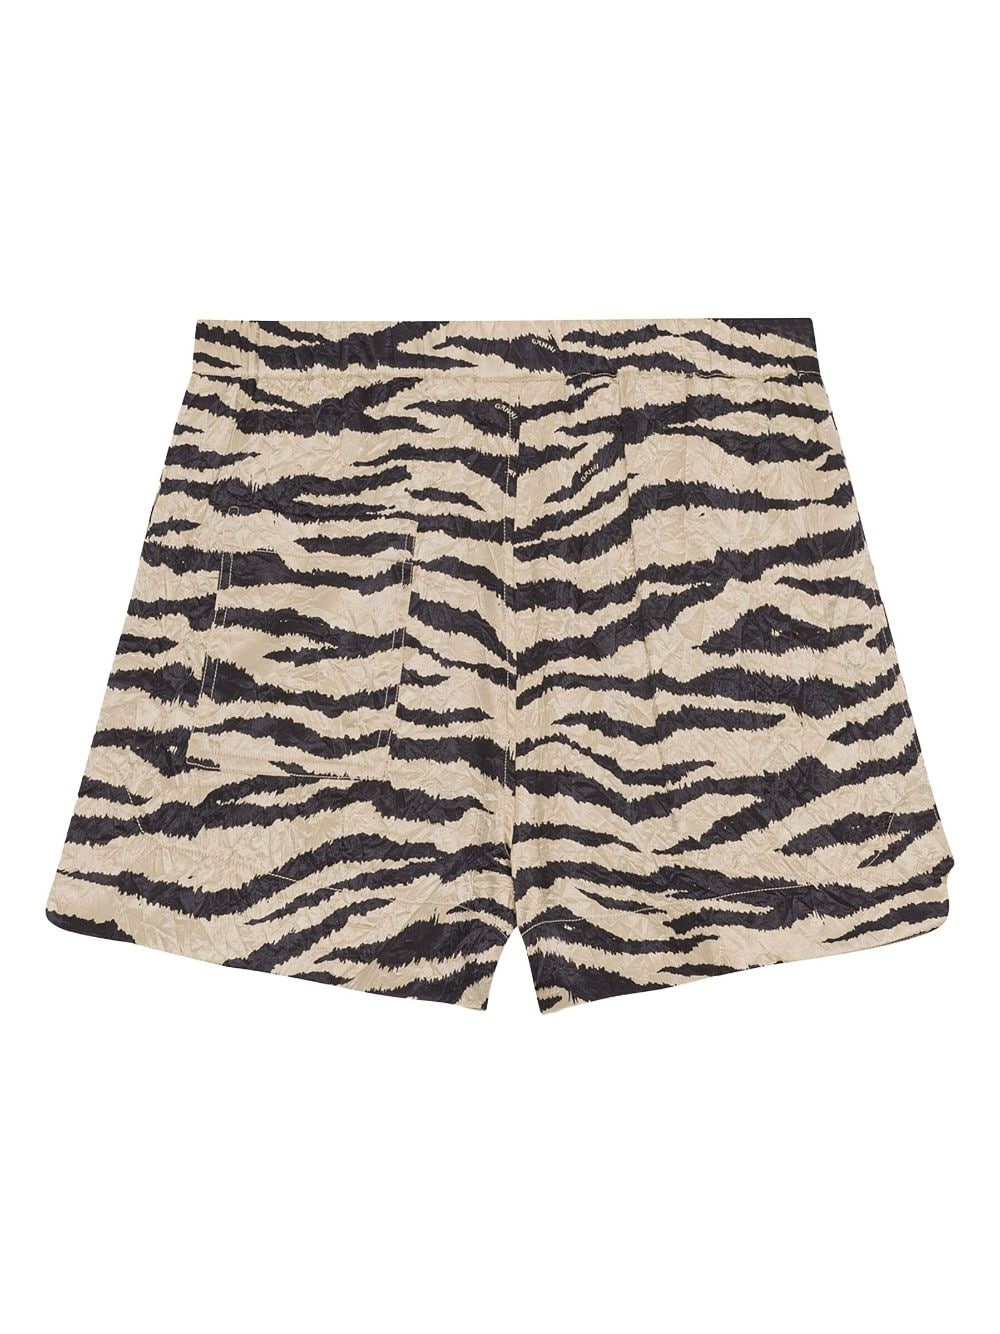 zebra-print crinked shorts - 6